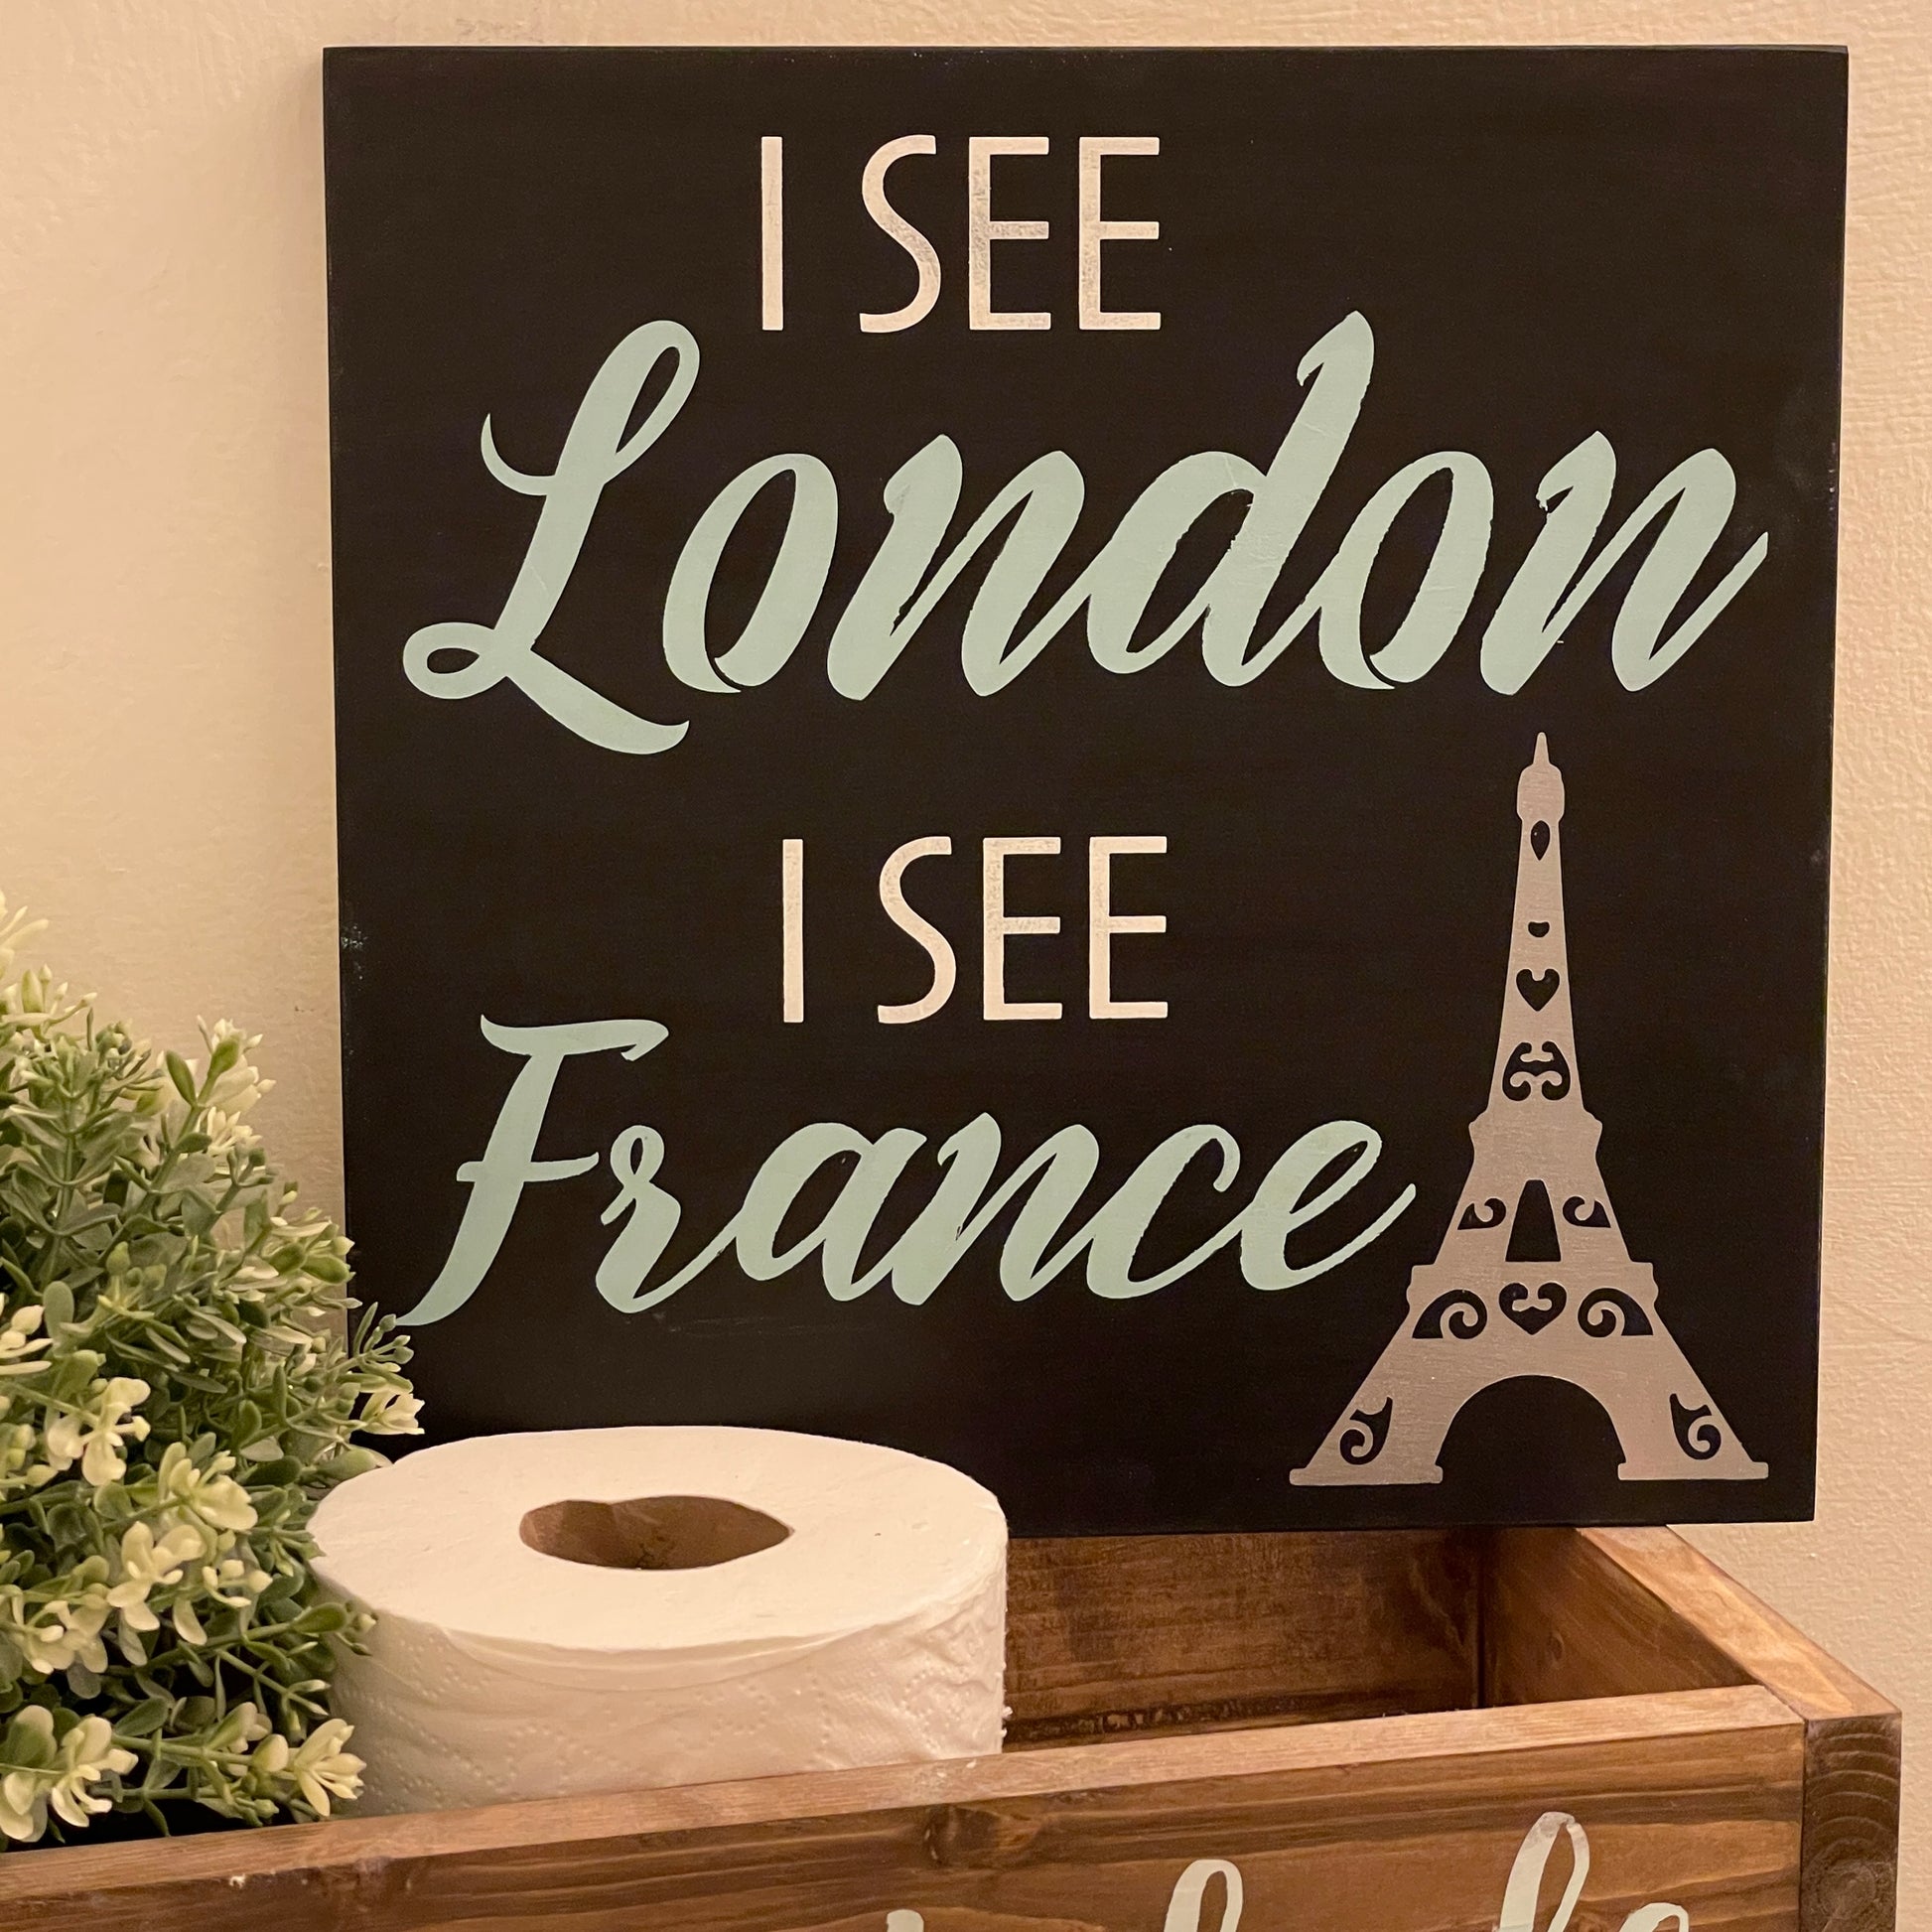 I see London I see France: MINI DESIGN - Paisley Grace Makery